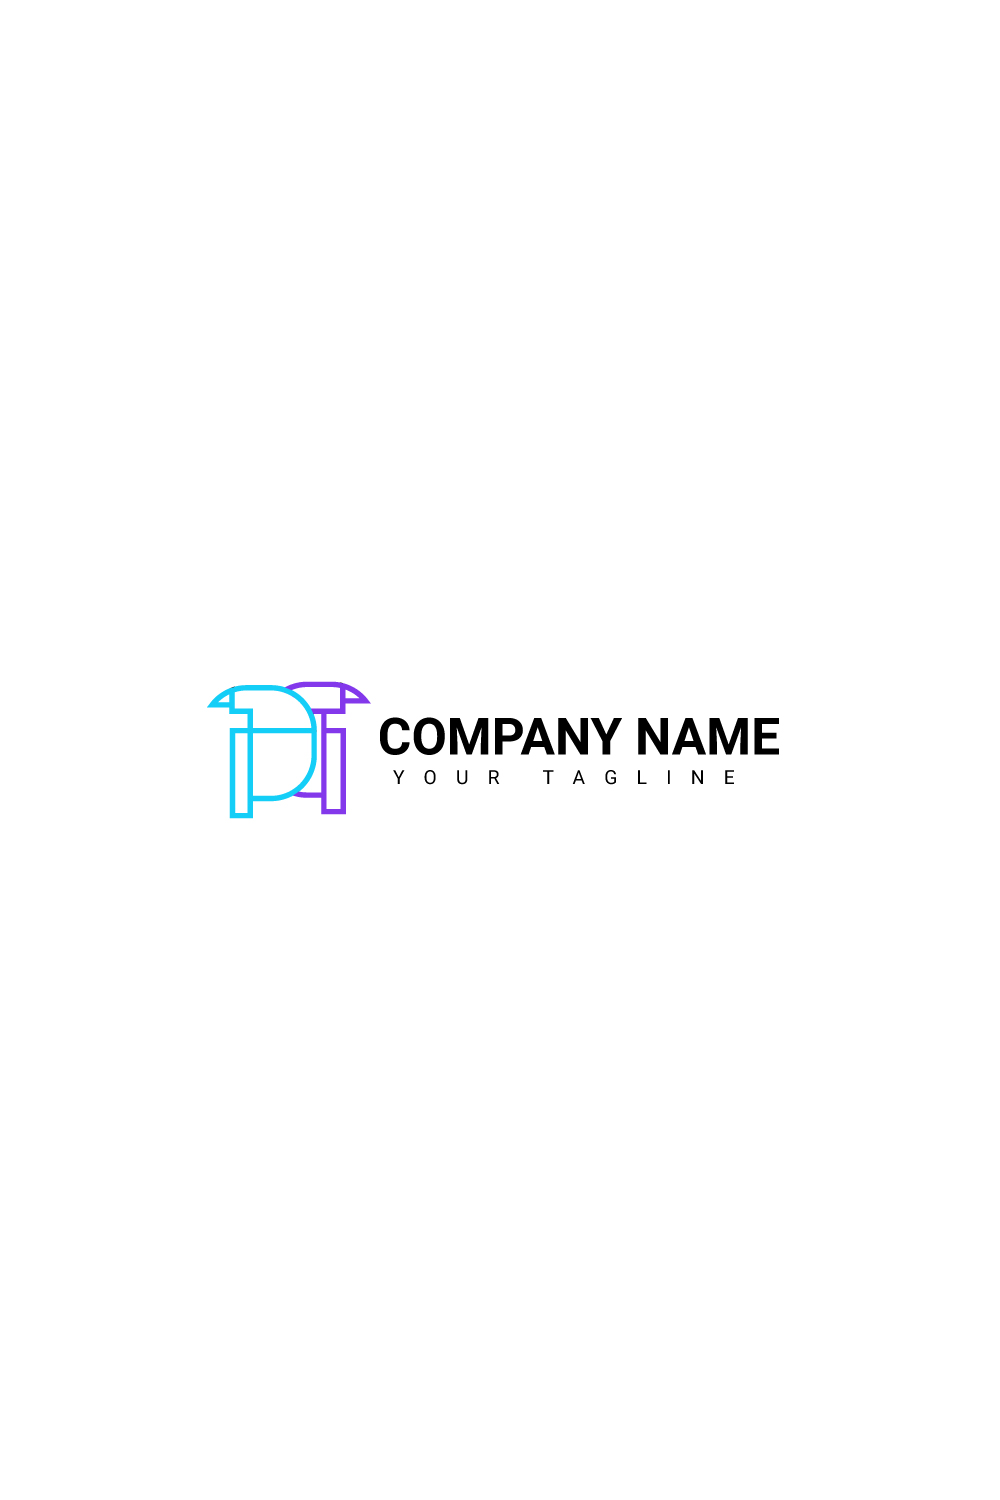 company logo design pinterest preview image.